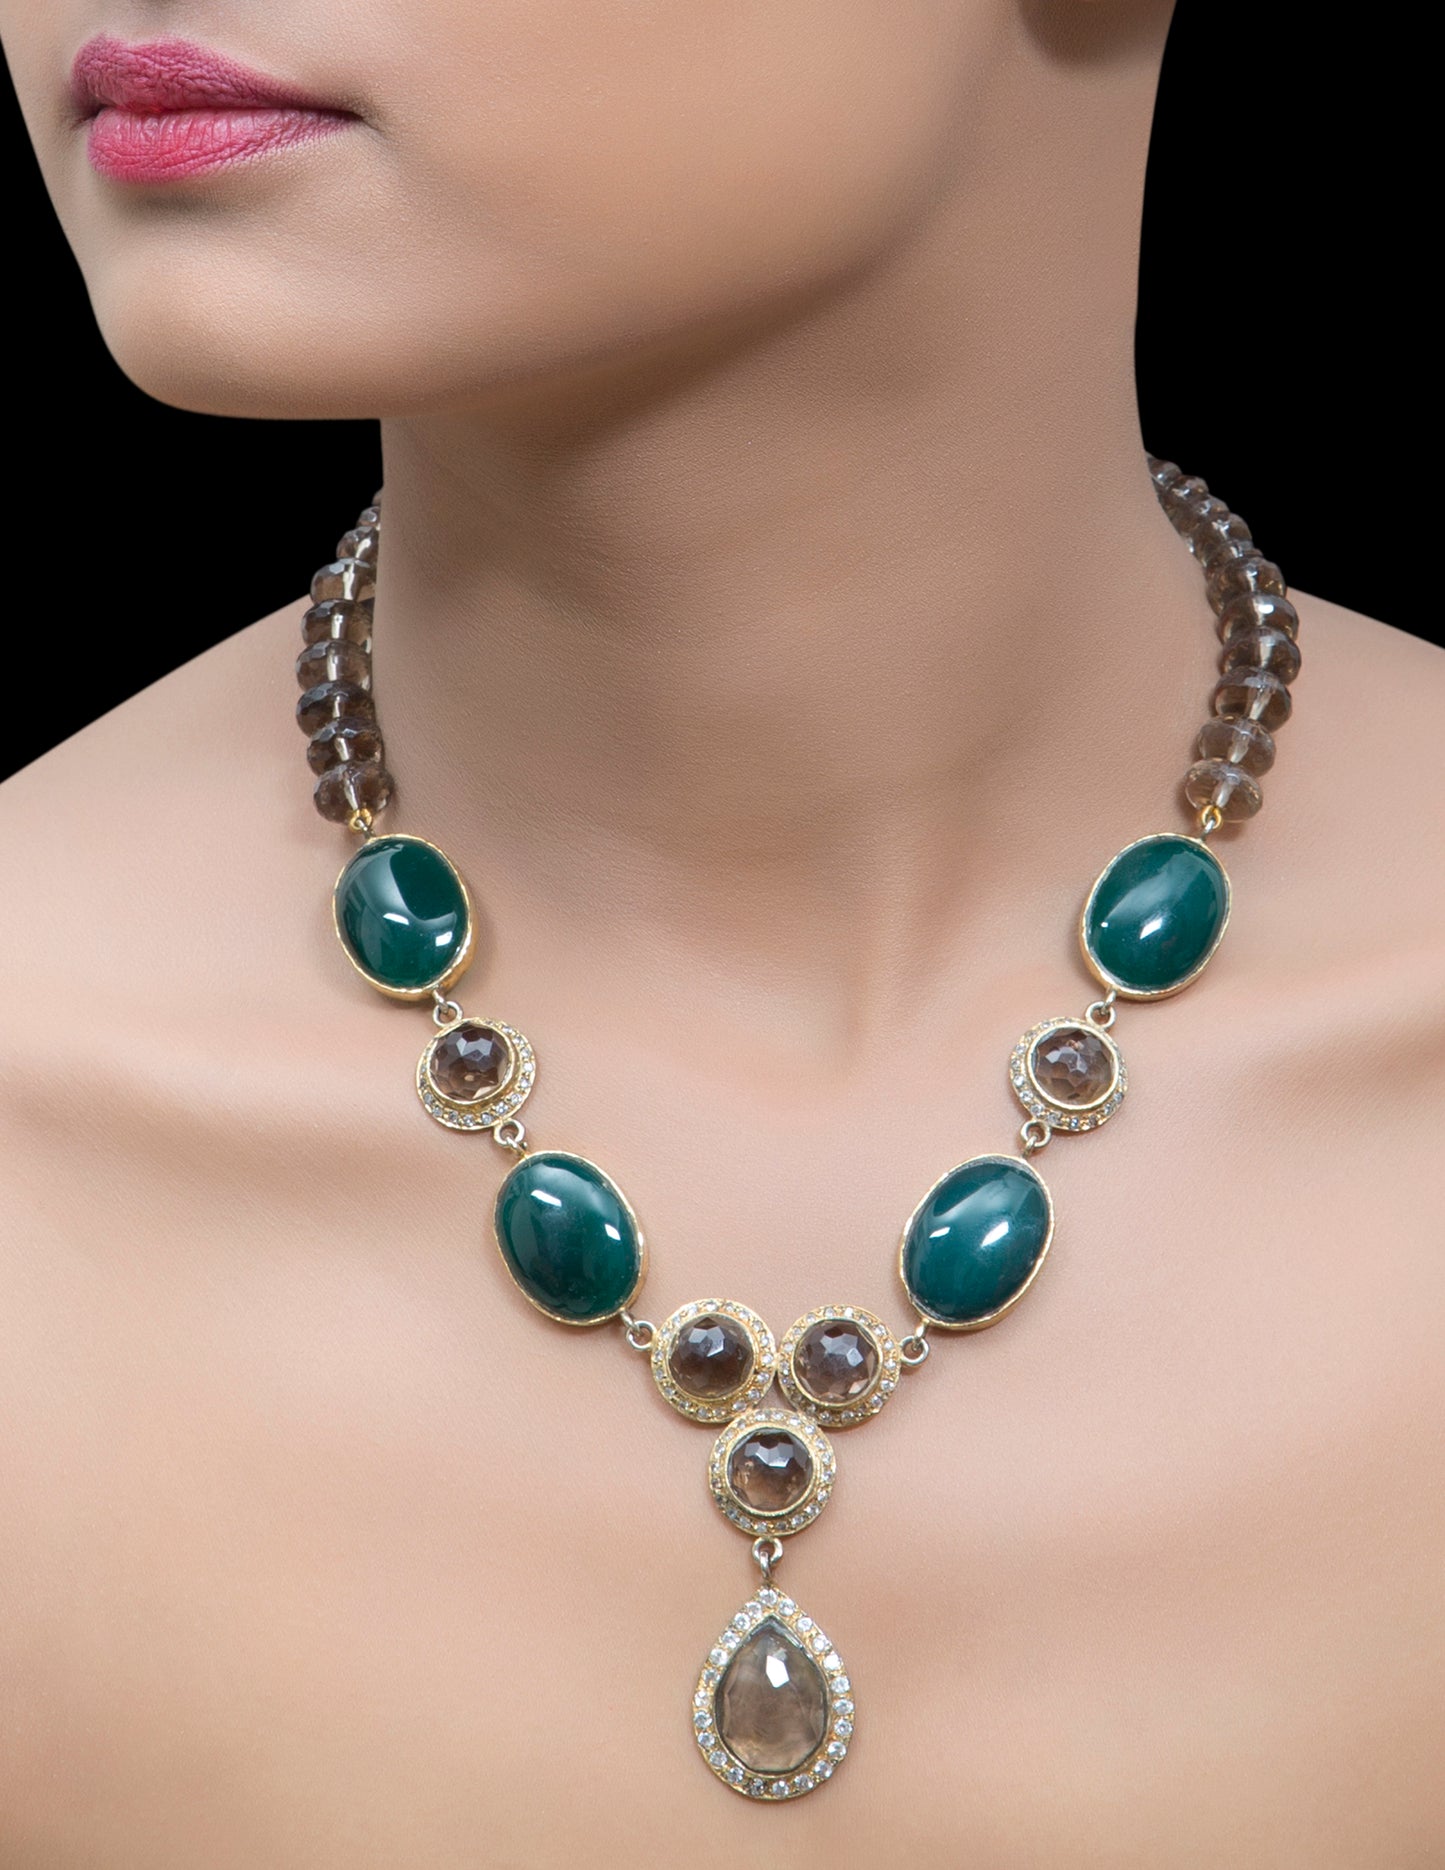 Encased chrysocolla cabachon & smoky quartz necklace